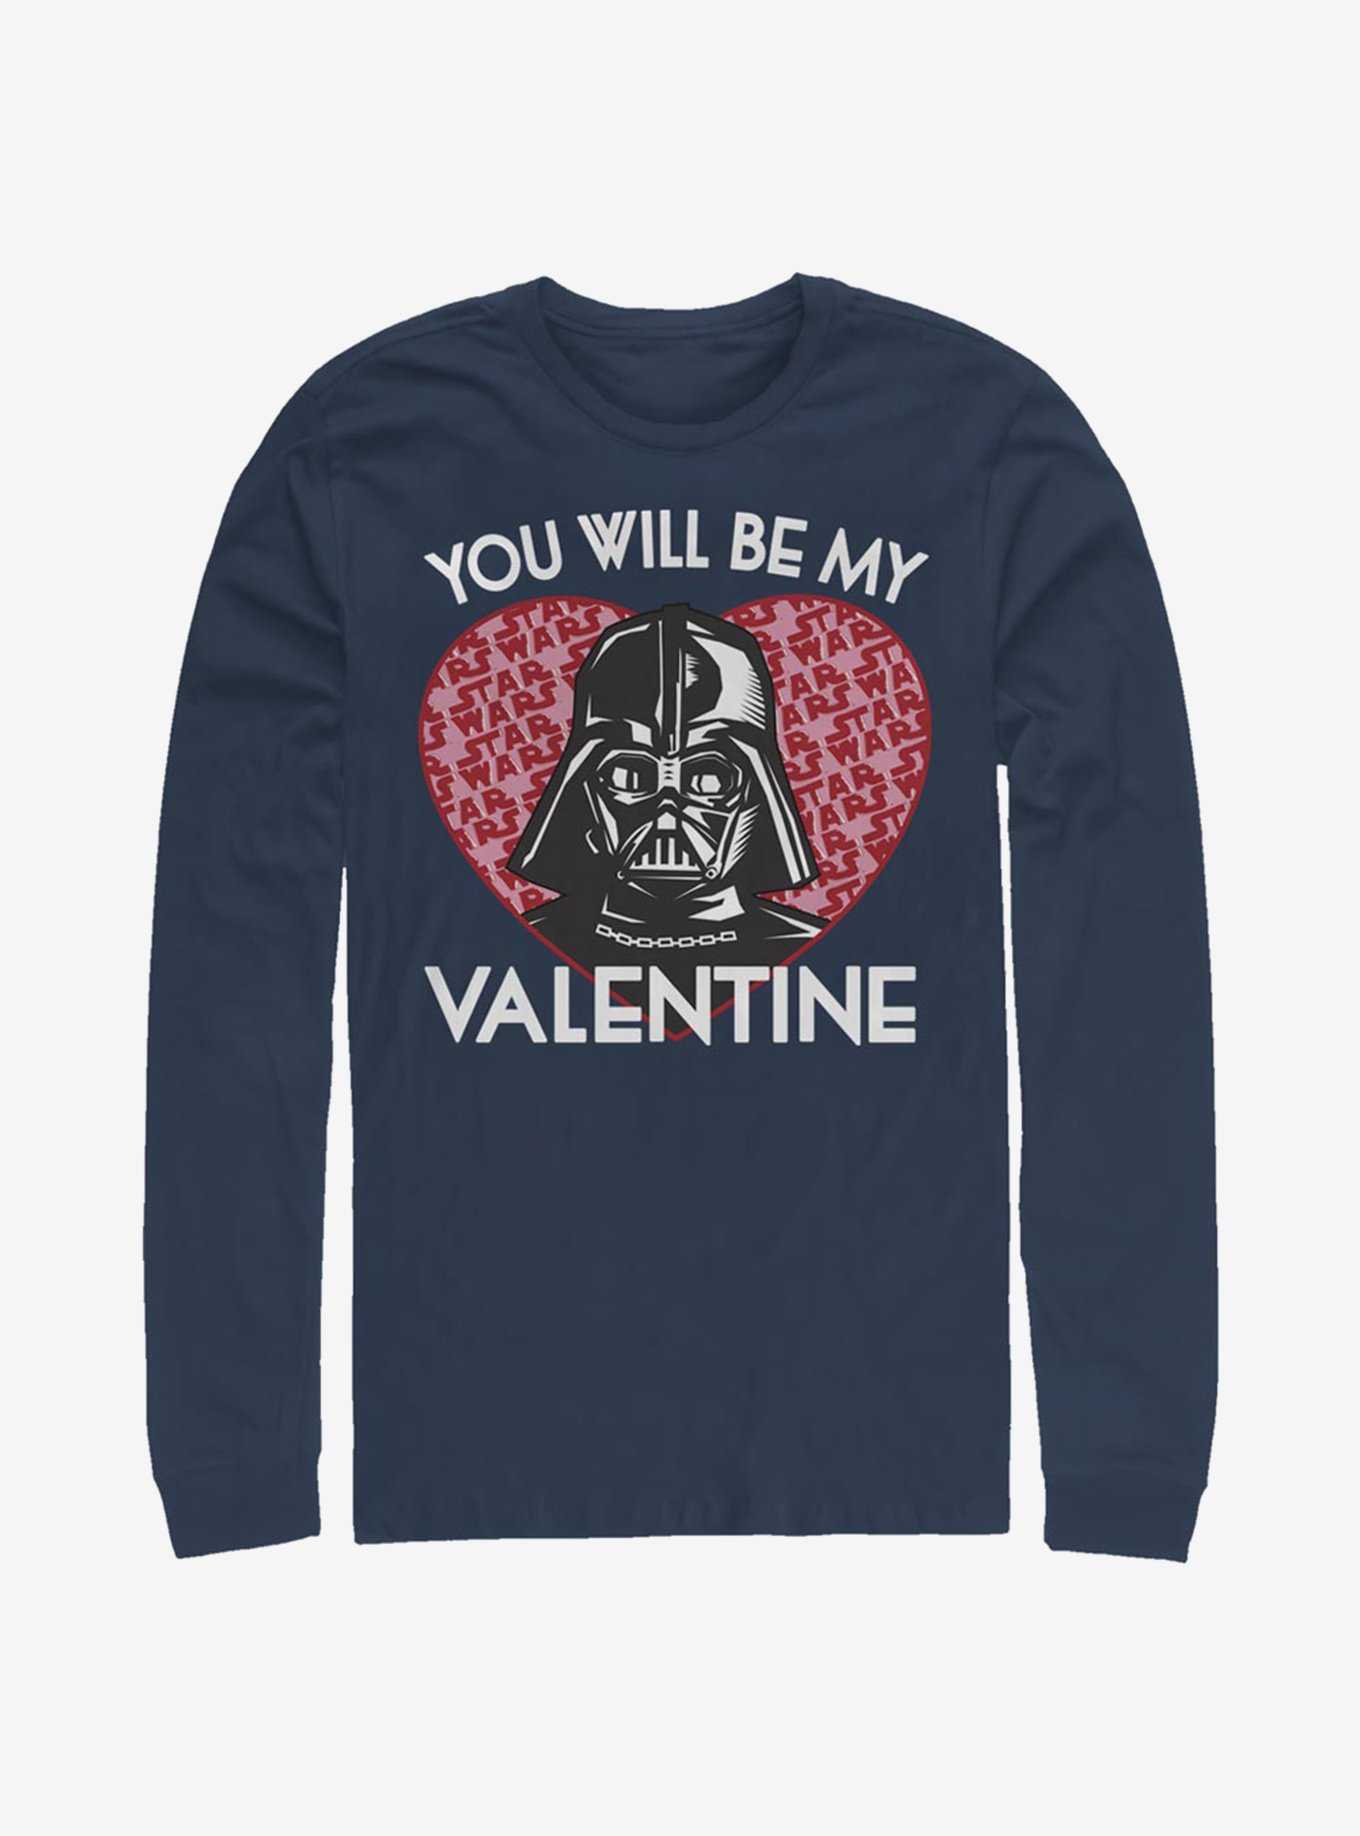 Star Wars Darth Vader Valentine Long-Sleeve T-Shirt, , hi-res